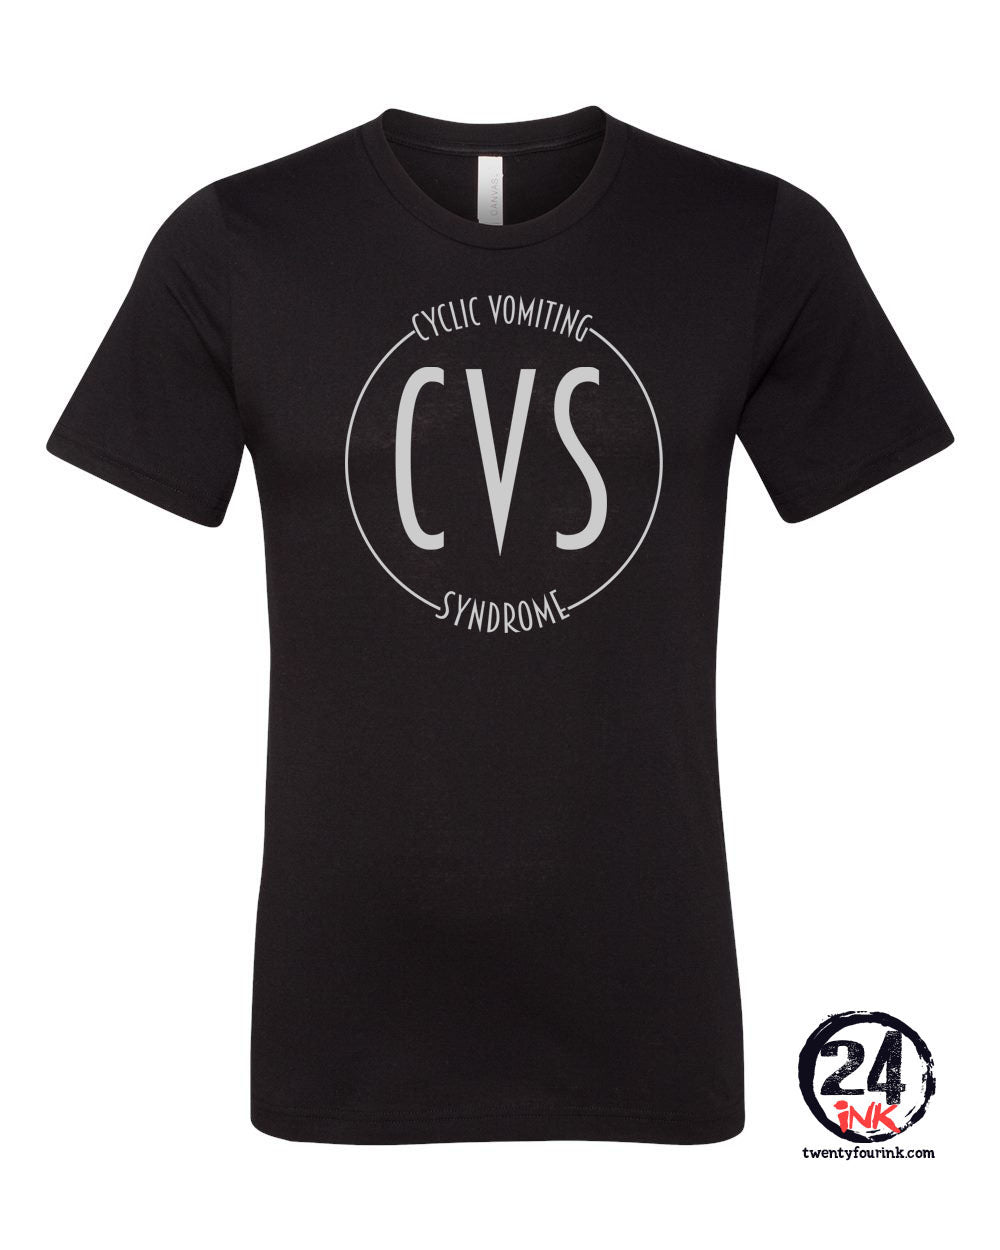 Cyclic Vomiting Syndrome, CVS Awareness T- Shirt